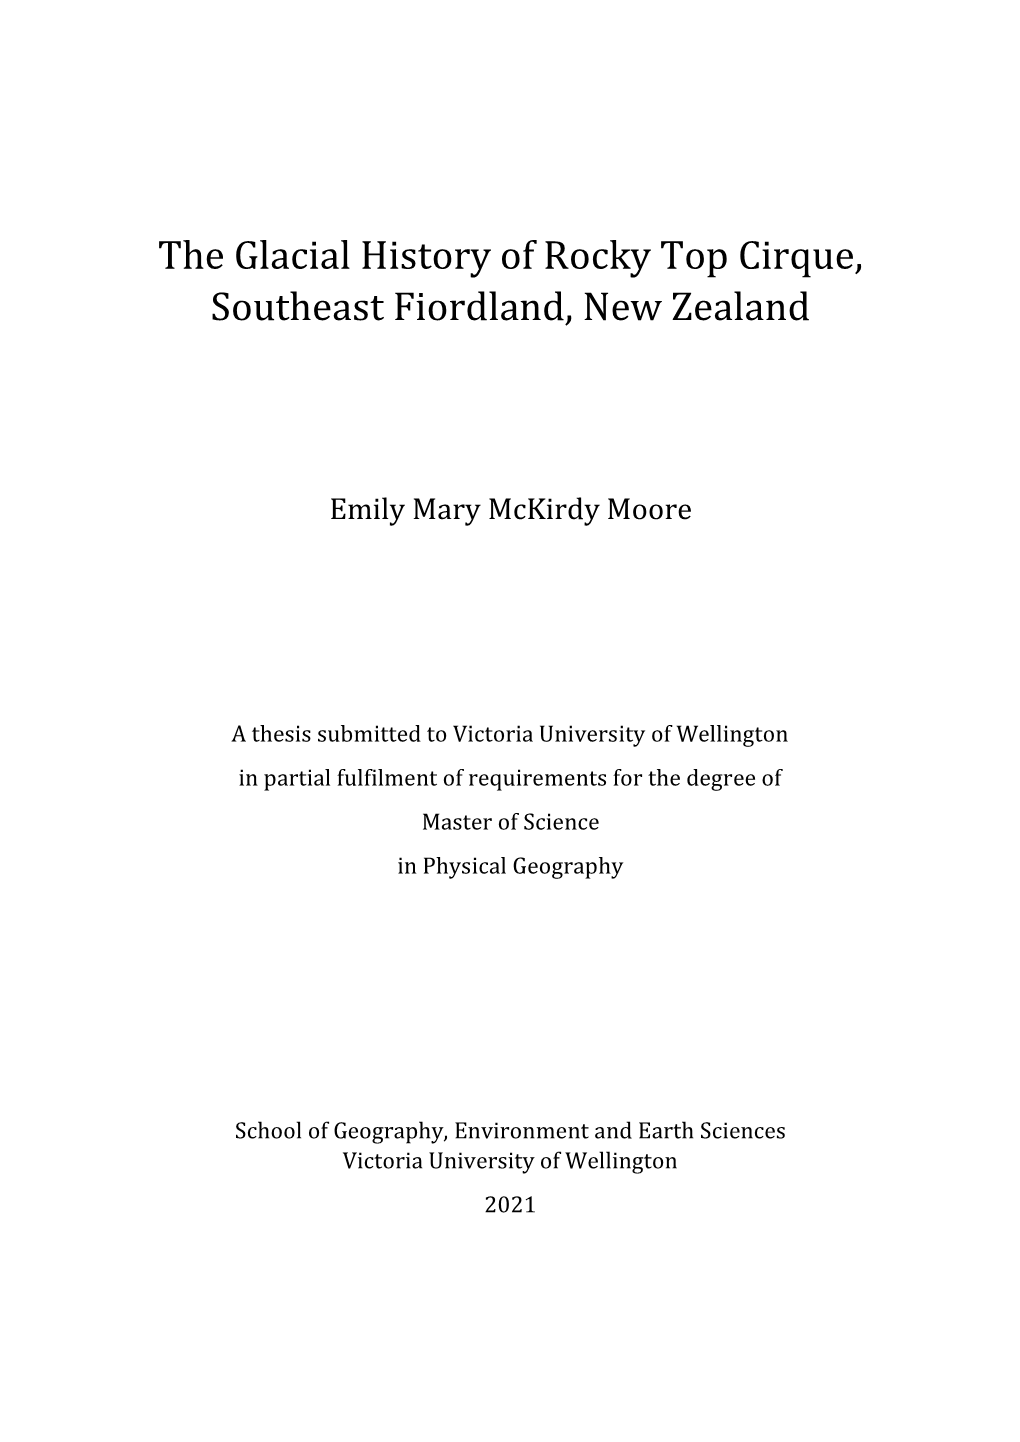 The Glacial History of Rocky Top Cirque, Southeast Fiordland, New Zealand